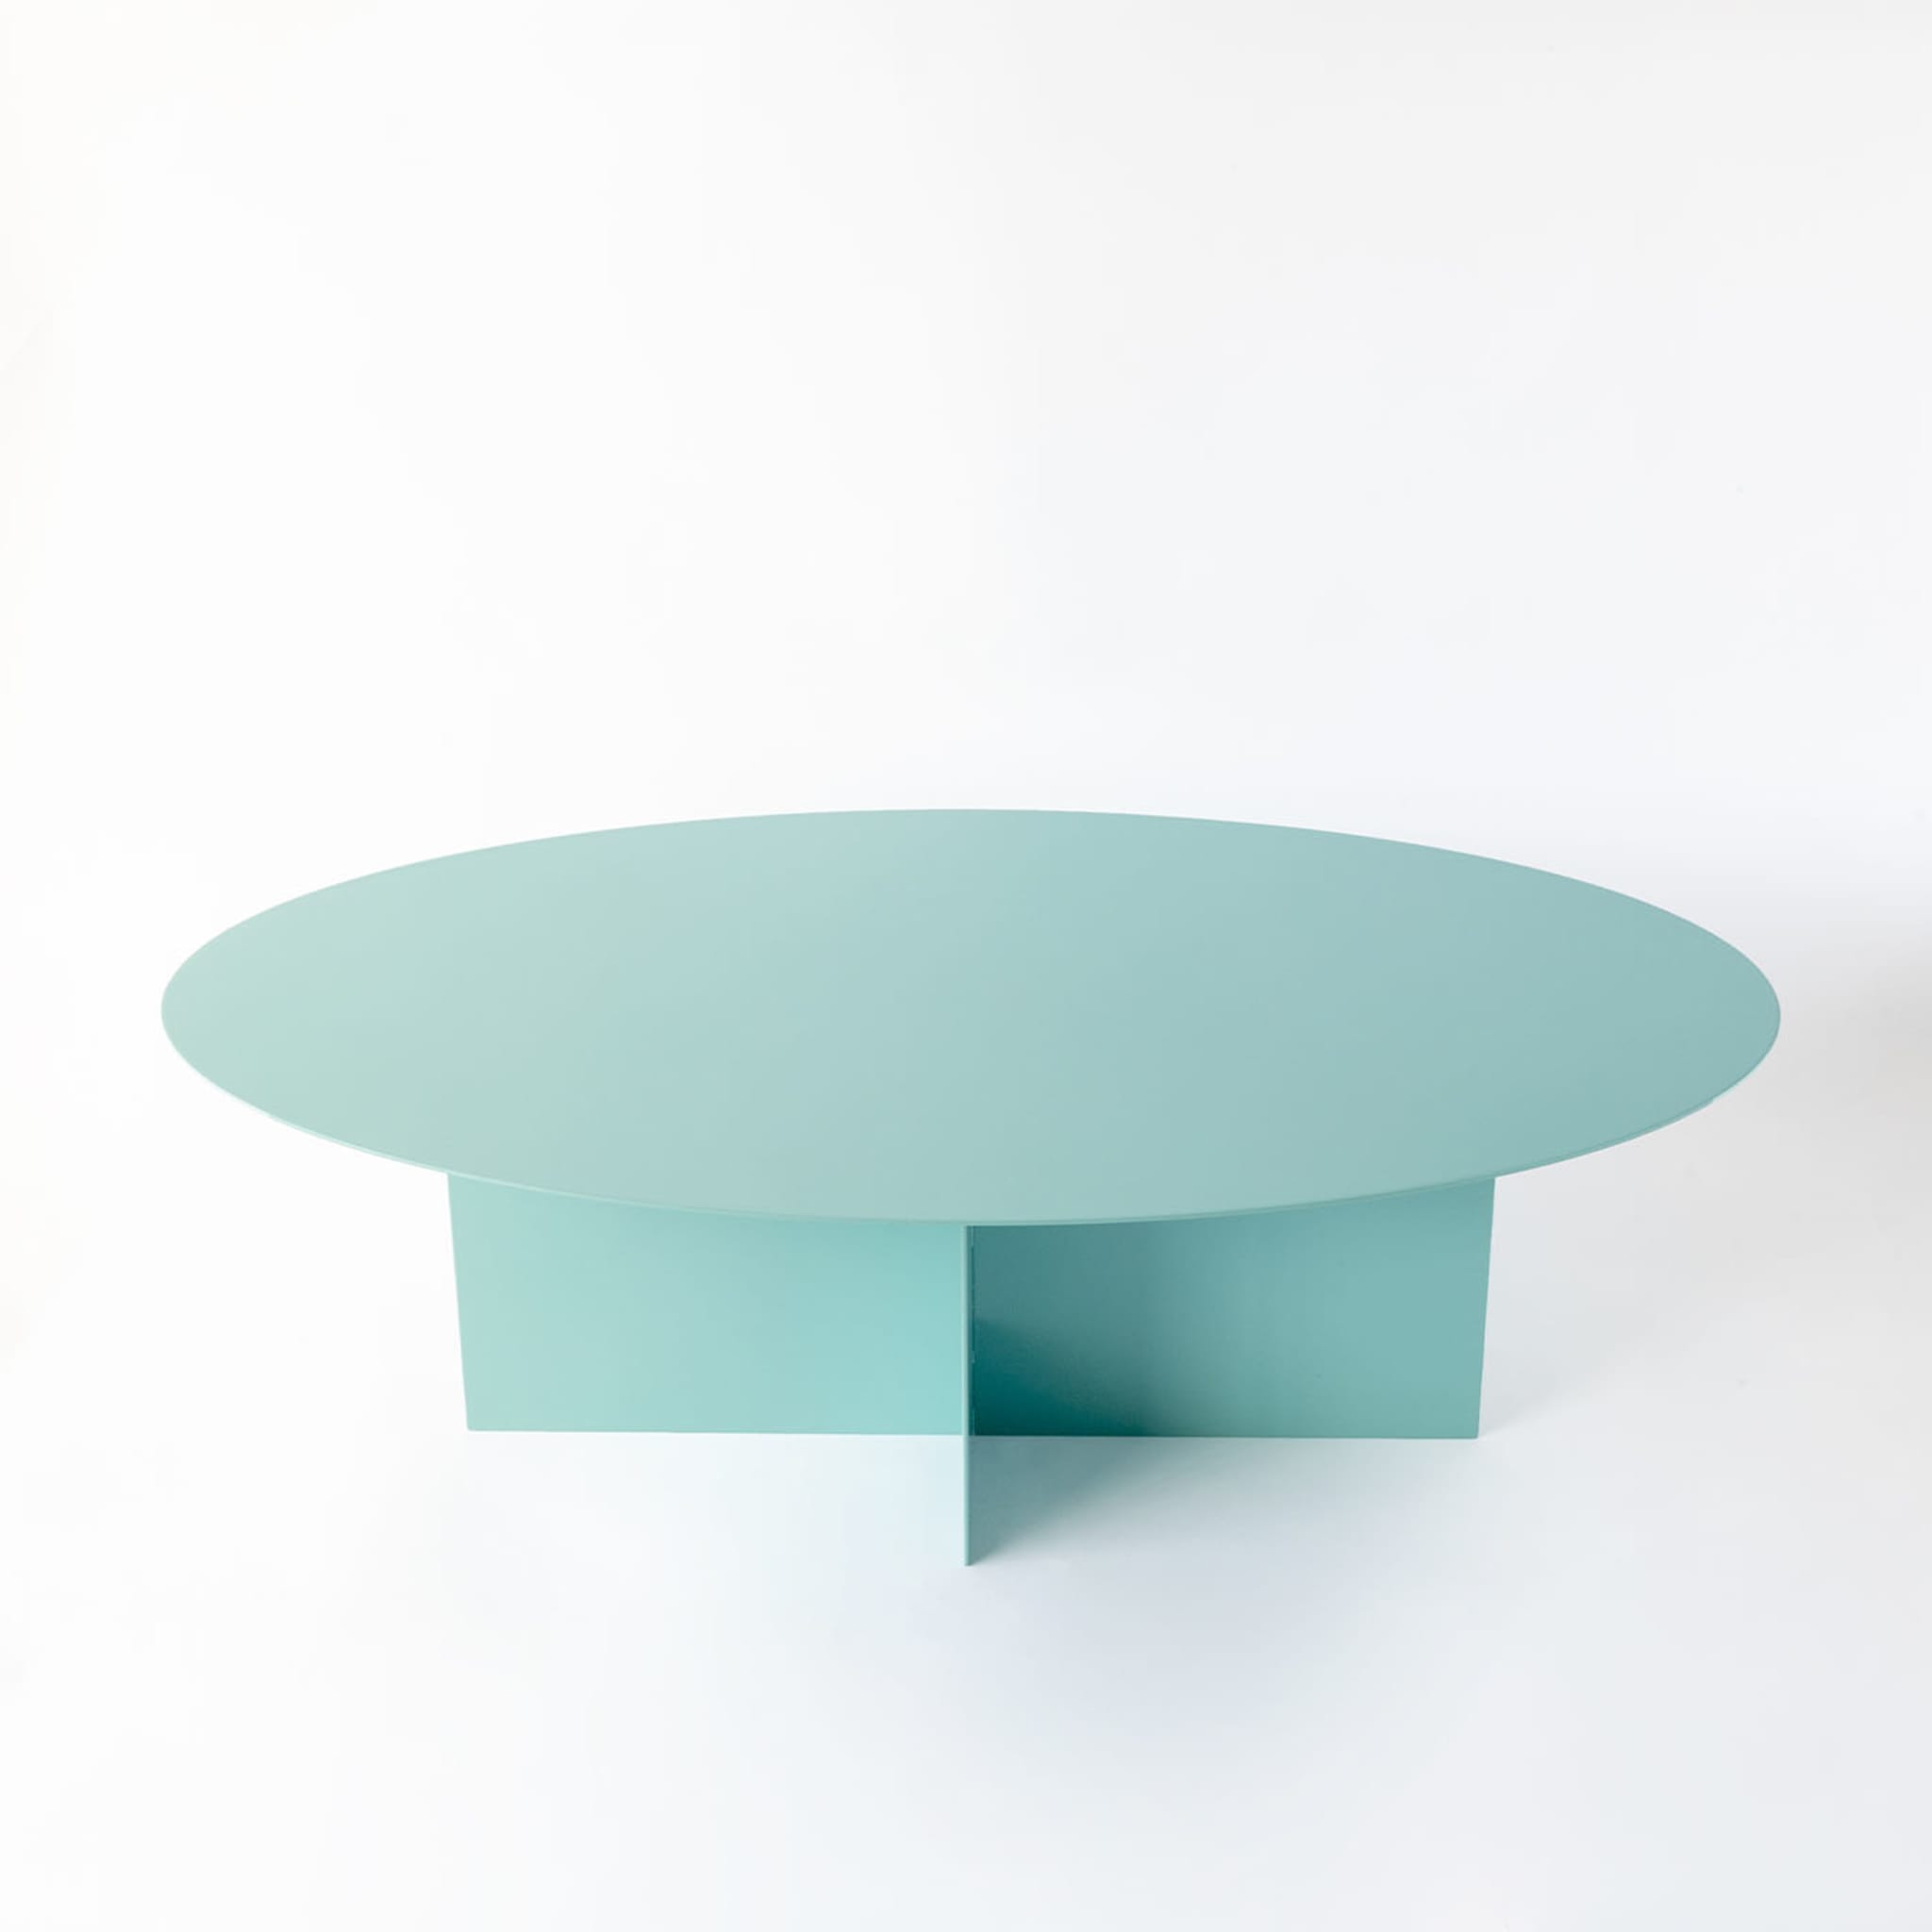 Across Oval Coffe Table Elliptical by Claudia Pignatale - Vue alternative 1